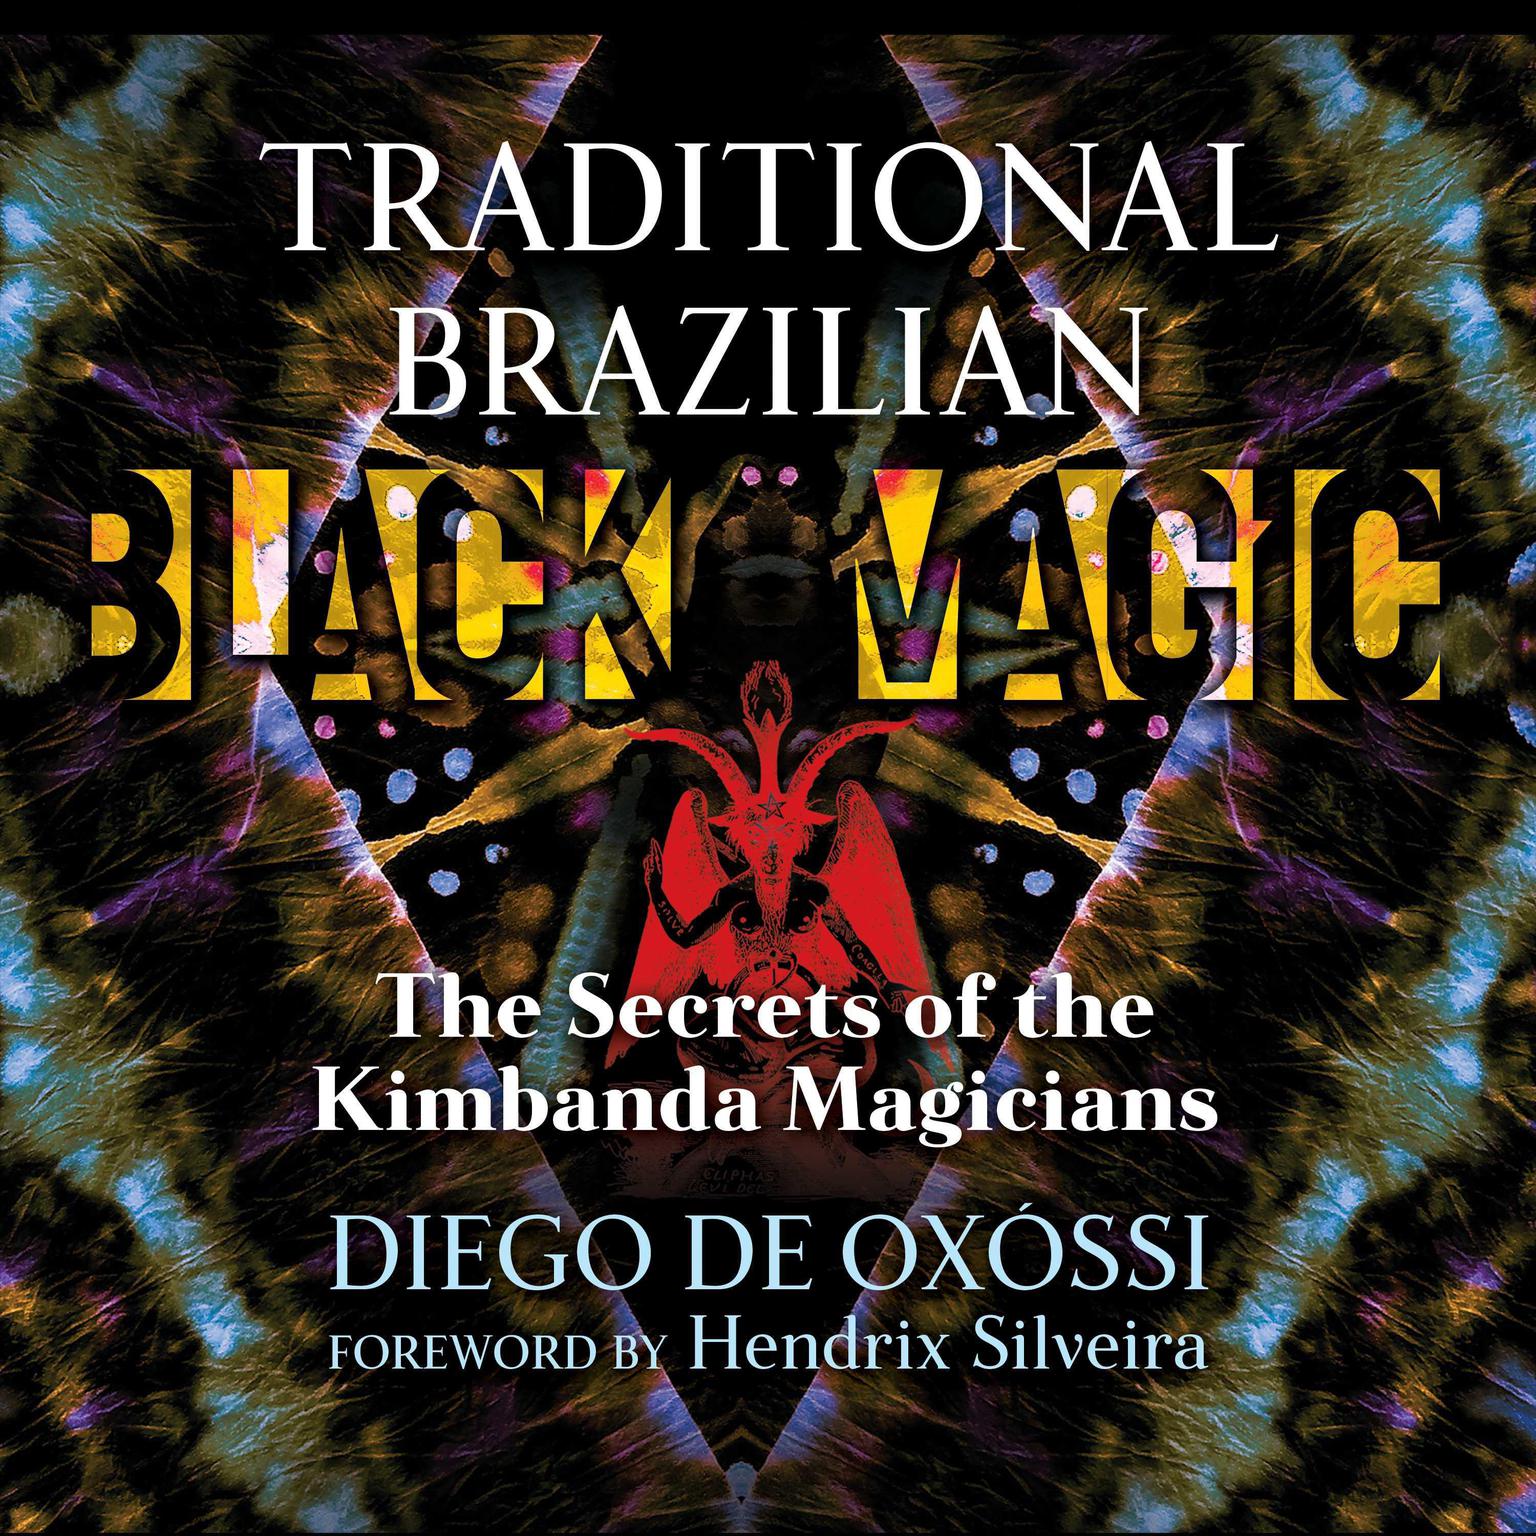 Traditional Brazilian Black Magic: The Secrets of the Kimbanda Magicians Audiobook, by Diego de Oxóssi